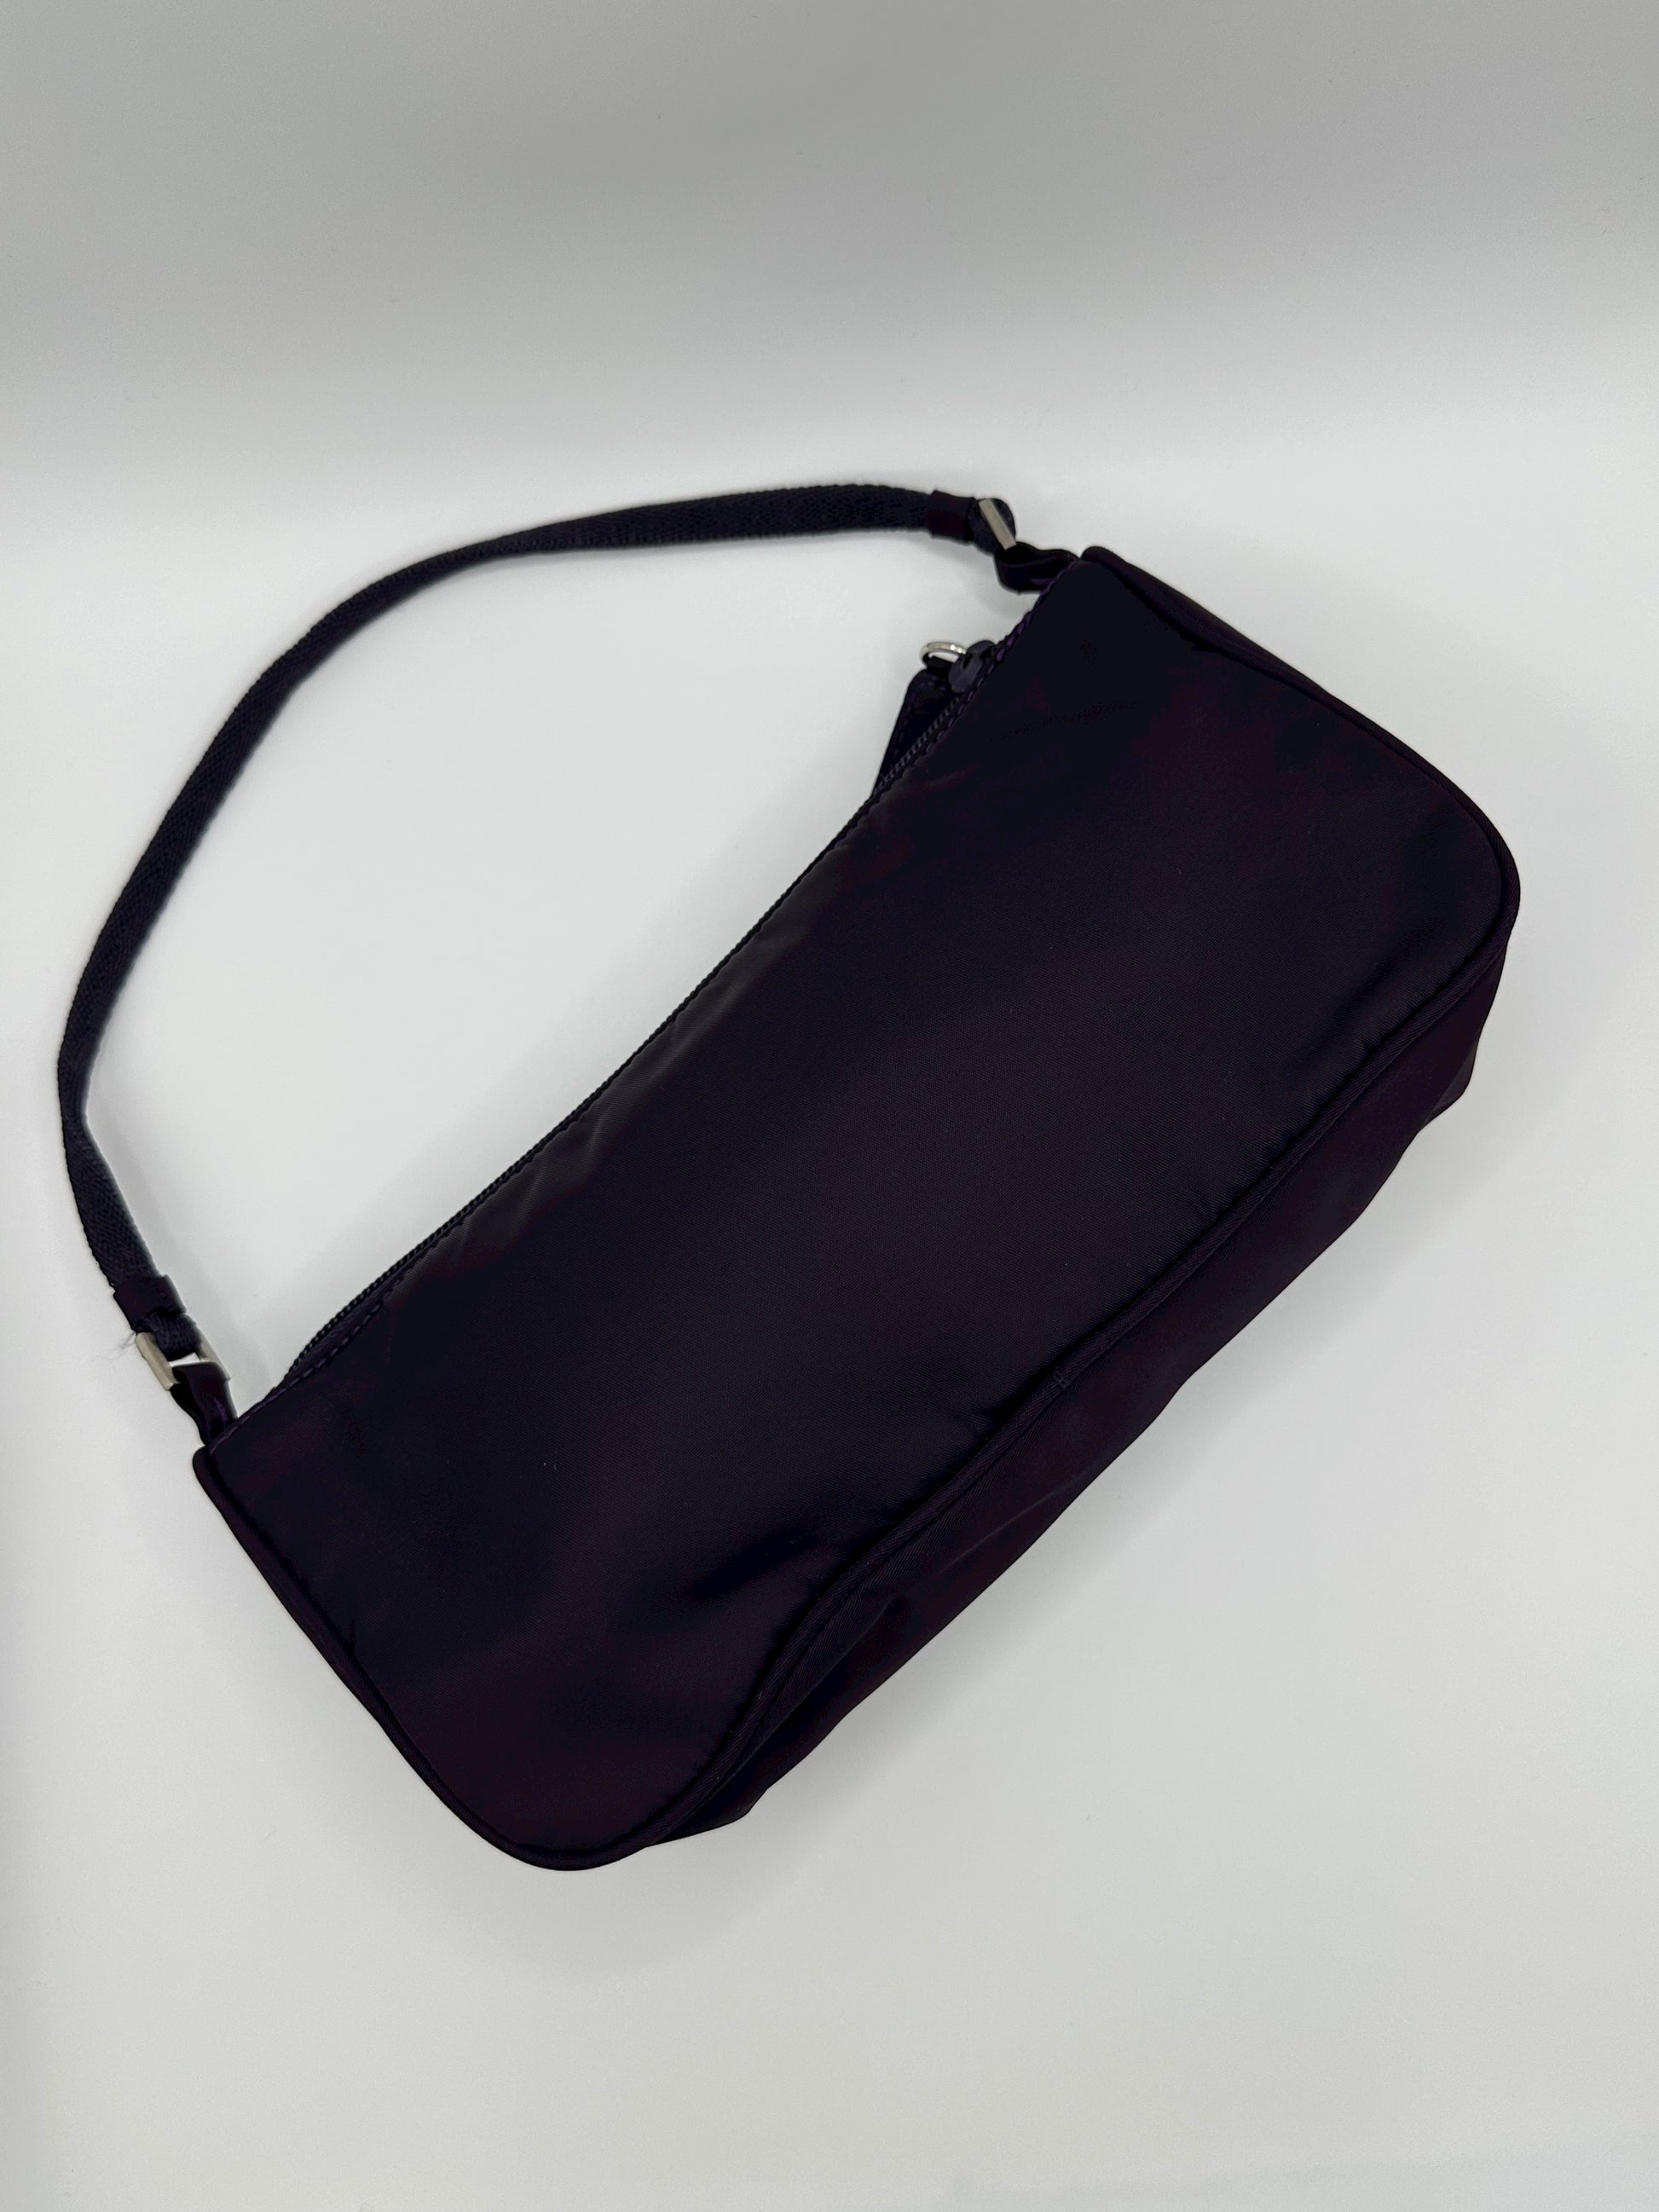 Purple Prada Nylon shoulder bag